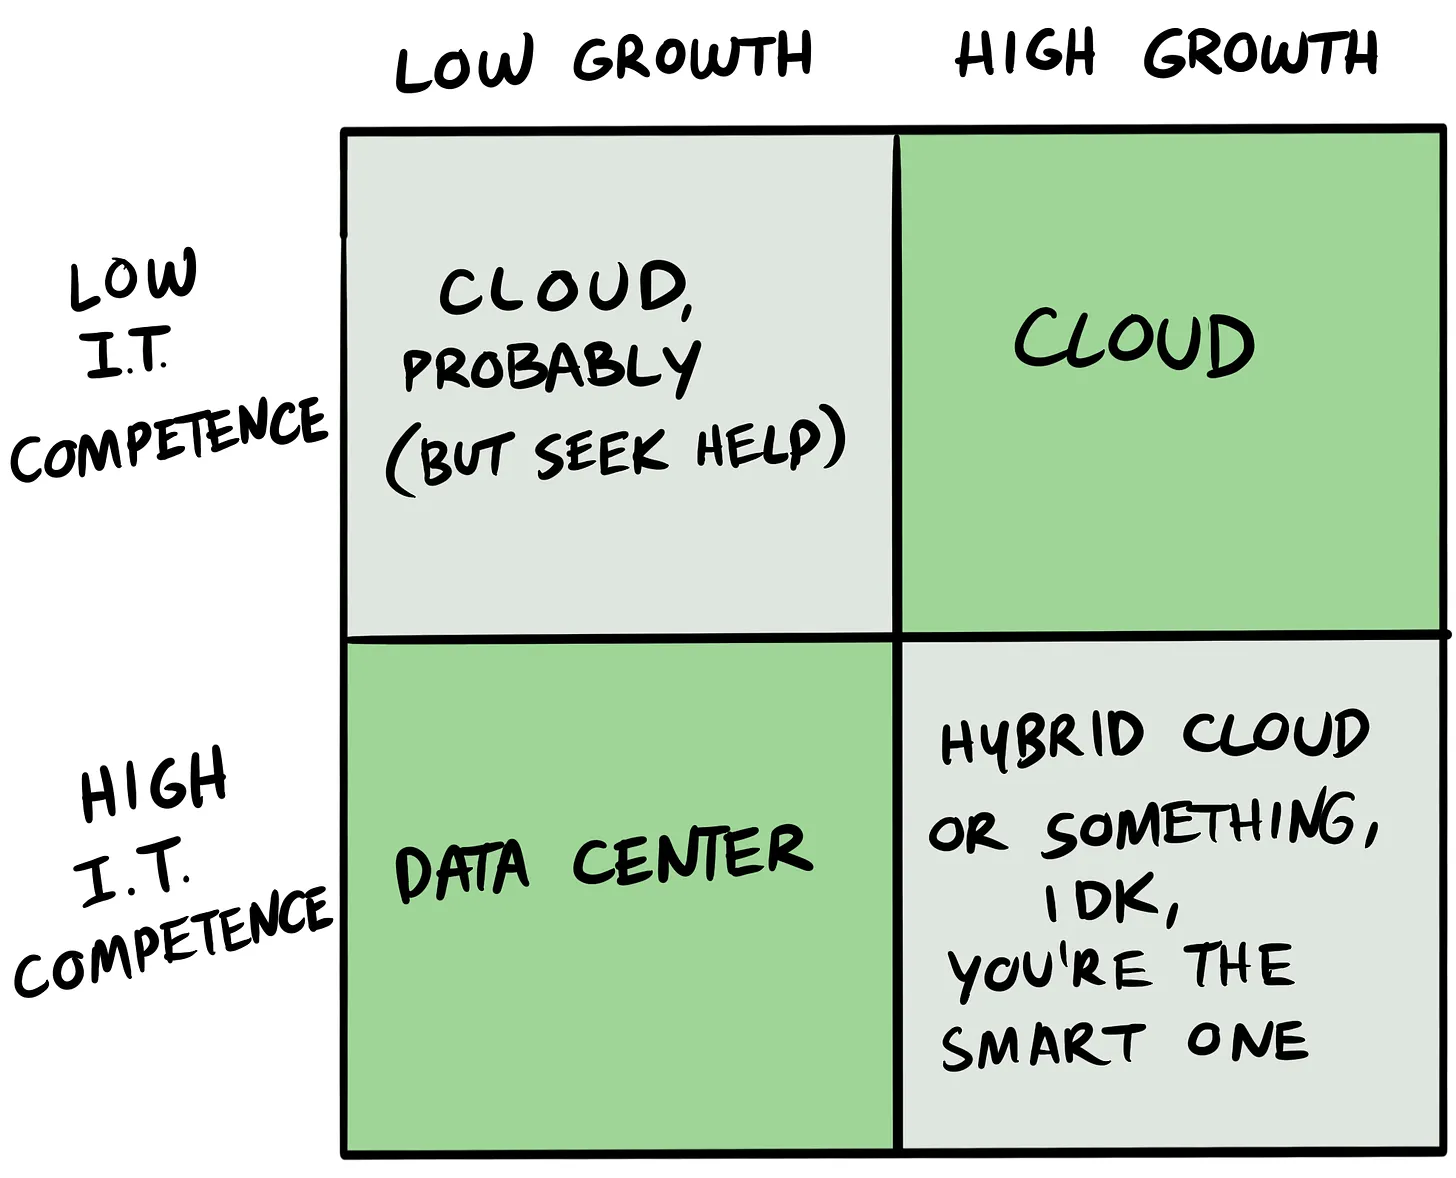 cloud-maturity-vs-growth.png